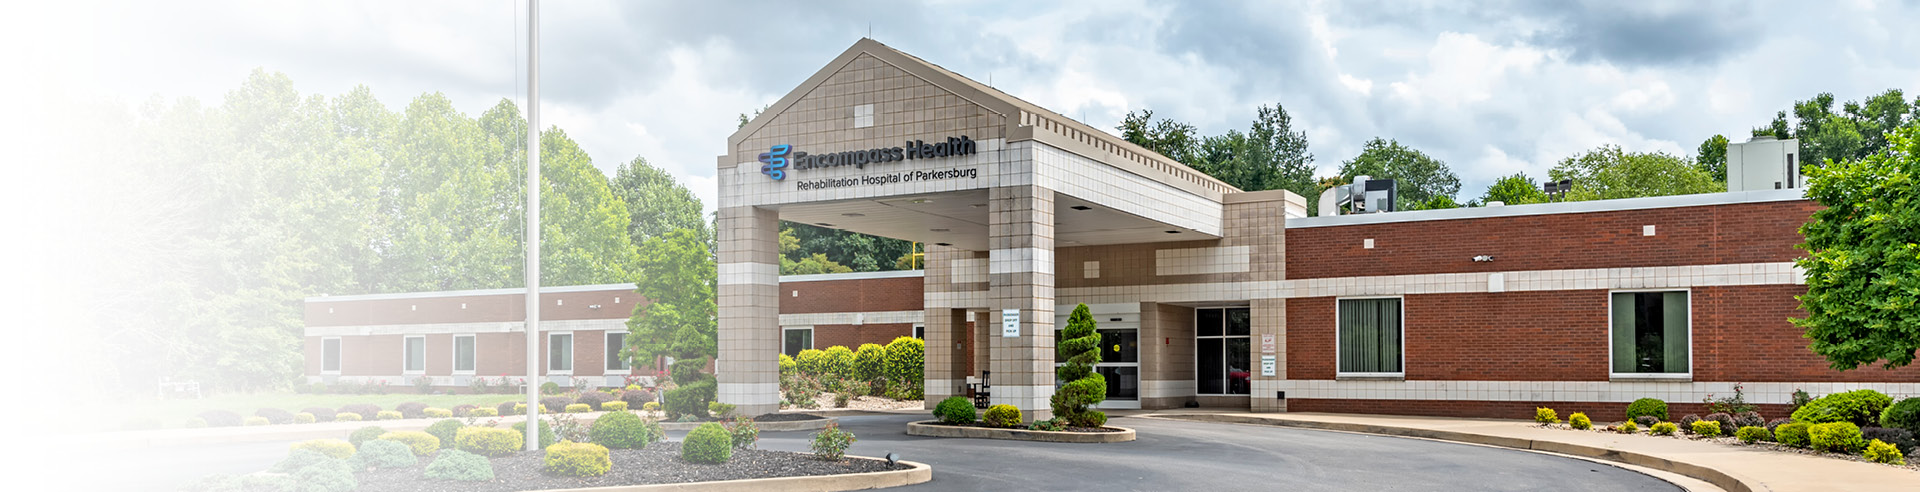 Encompass Health Rehabilitation Hospital of Parkersburg exterior